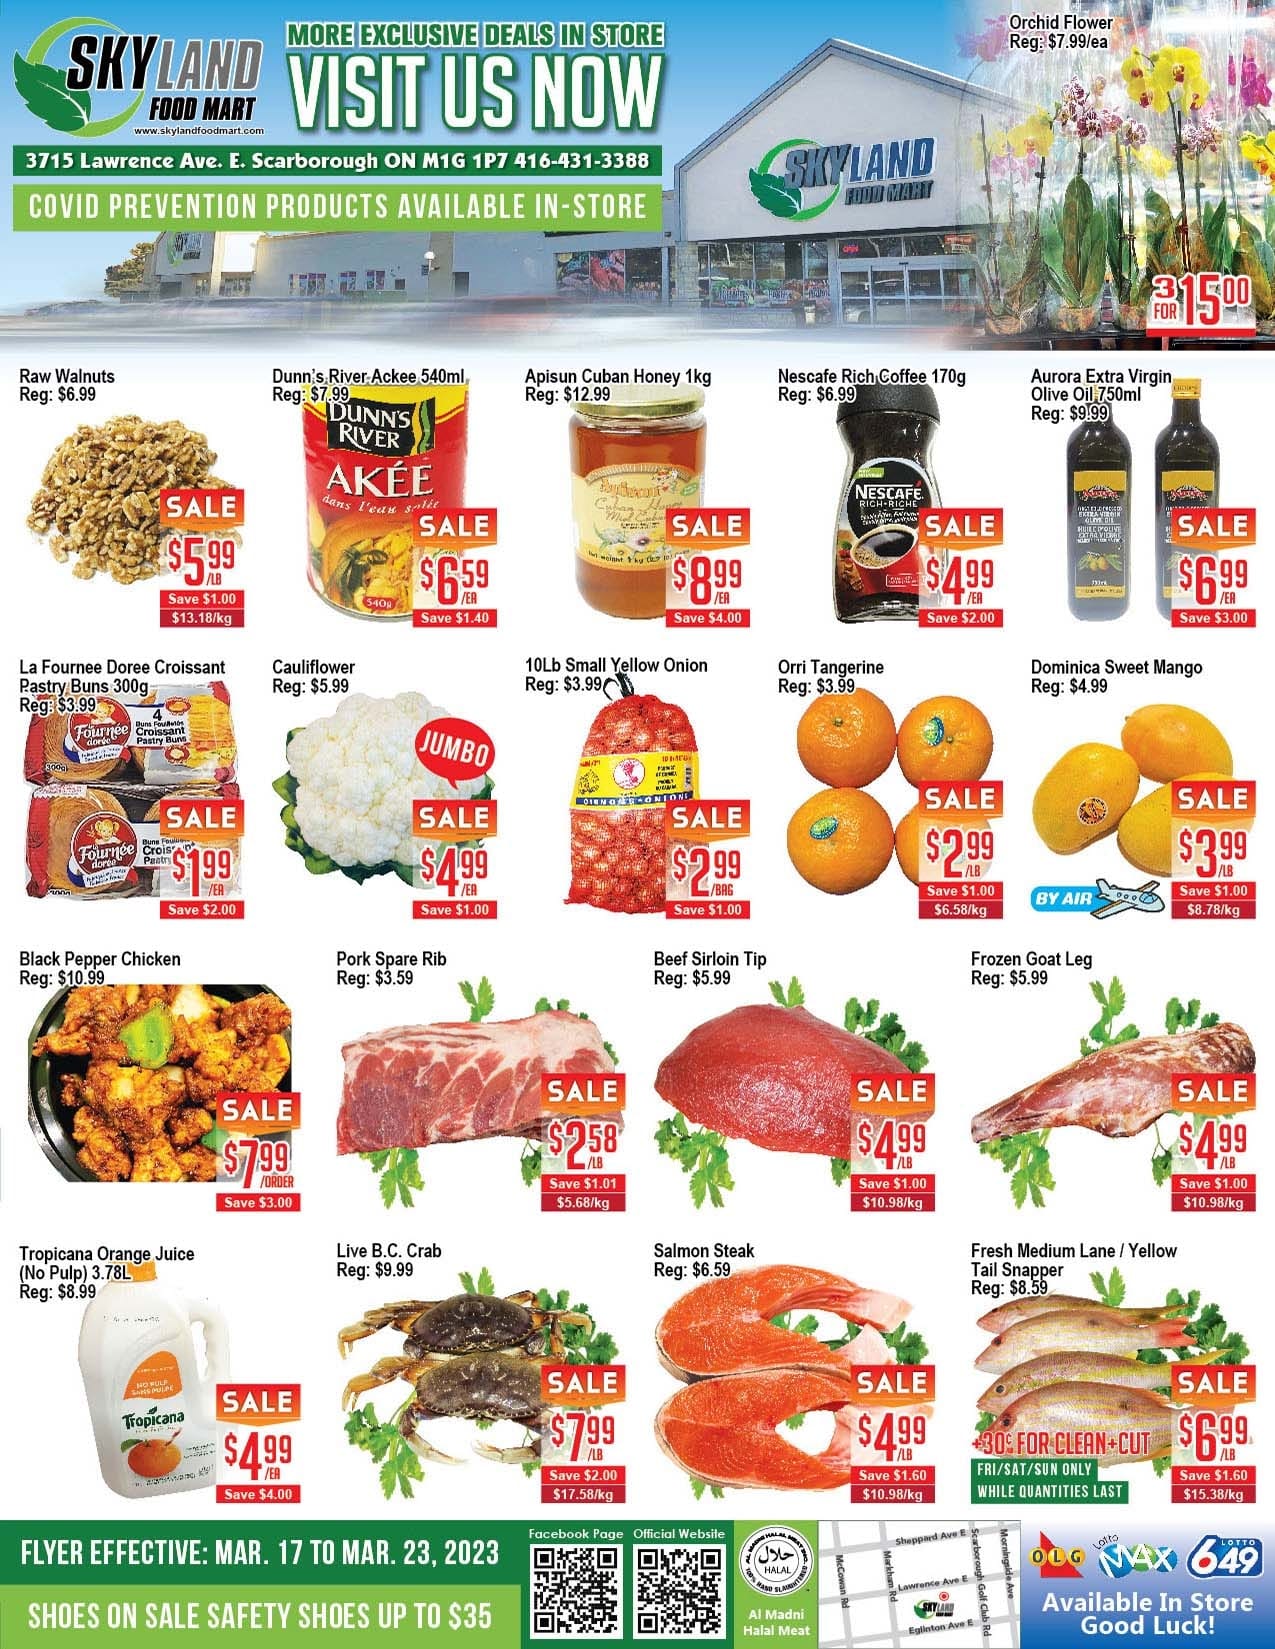 Skyland Food Mart - Weekly Flyer Specials - Page 1